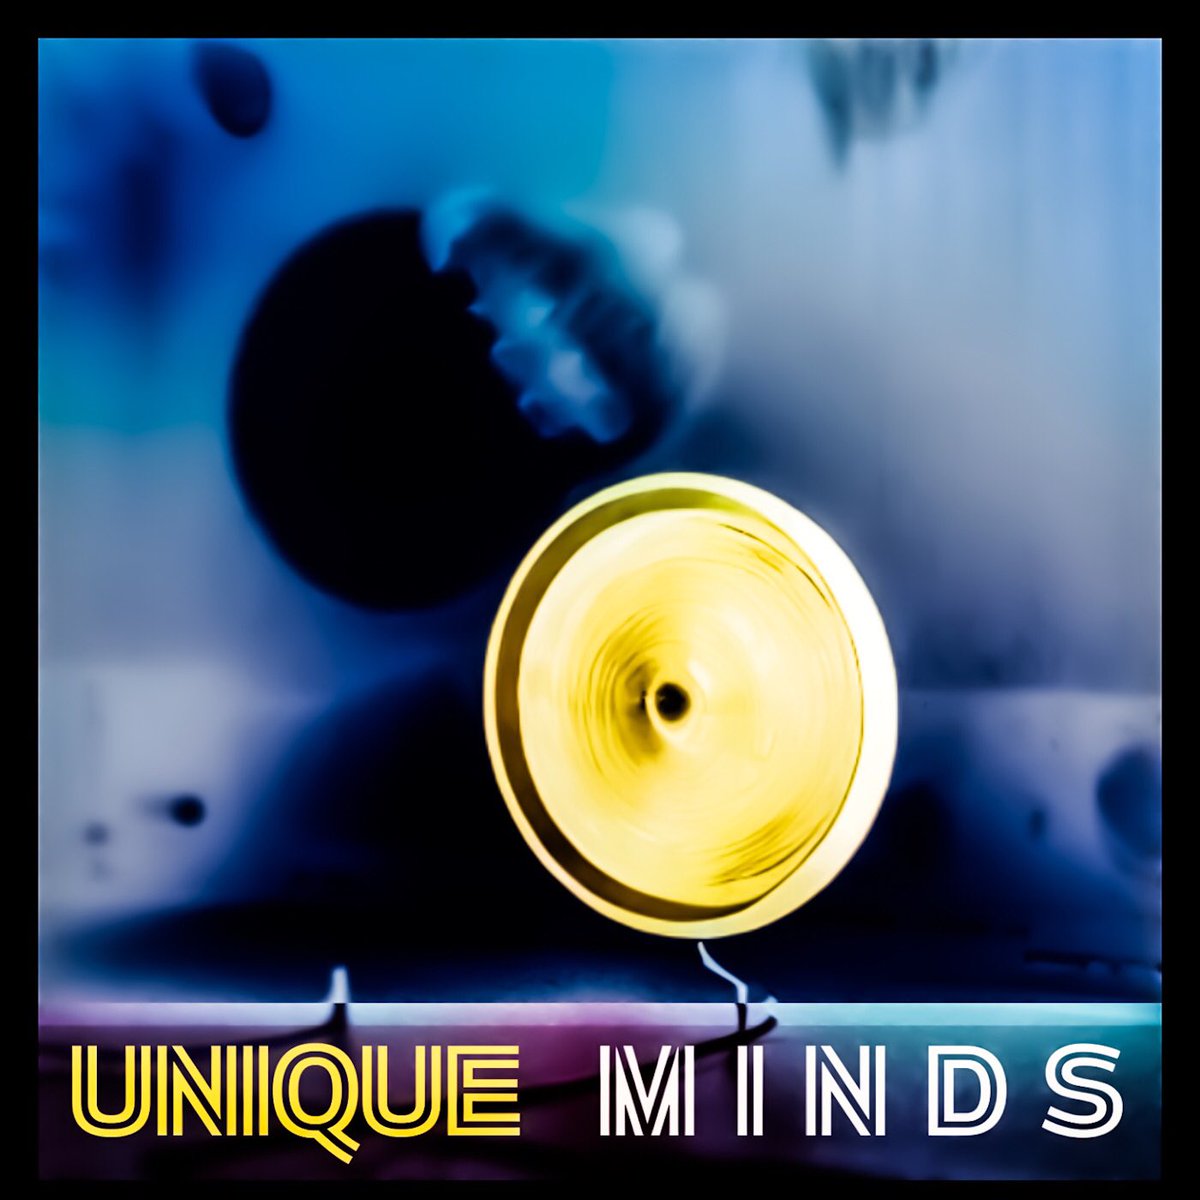 UNIQUE MINDS…unique sounds. Updated with: @MusicOfSoundUK @TrustTheDocUK @trevasmusic @Transmission13 @sarahmcquaid @VinnyPereiraLiv @domclarkmusic @SignalCommittee @platinummind @BulzaraMusic @InvisibleSqrl @sixfourzerotwo open.spotify.com/playlist/2DVEh…